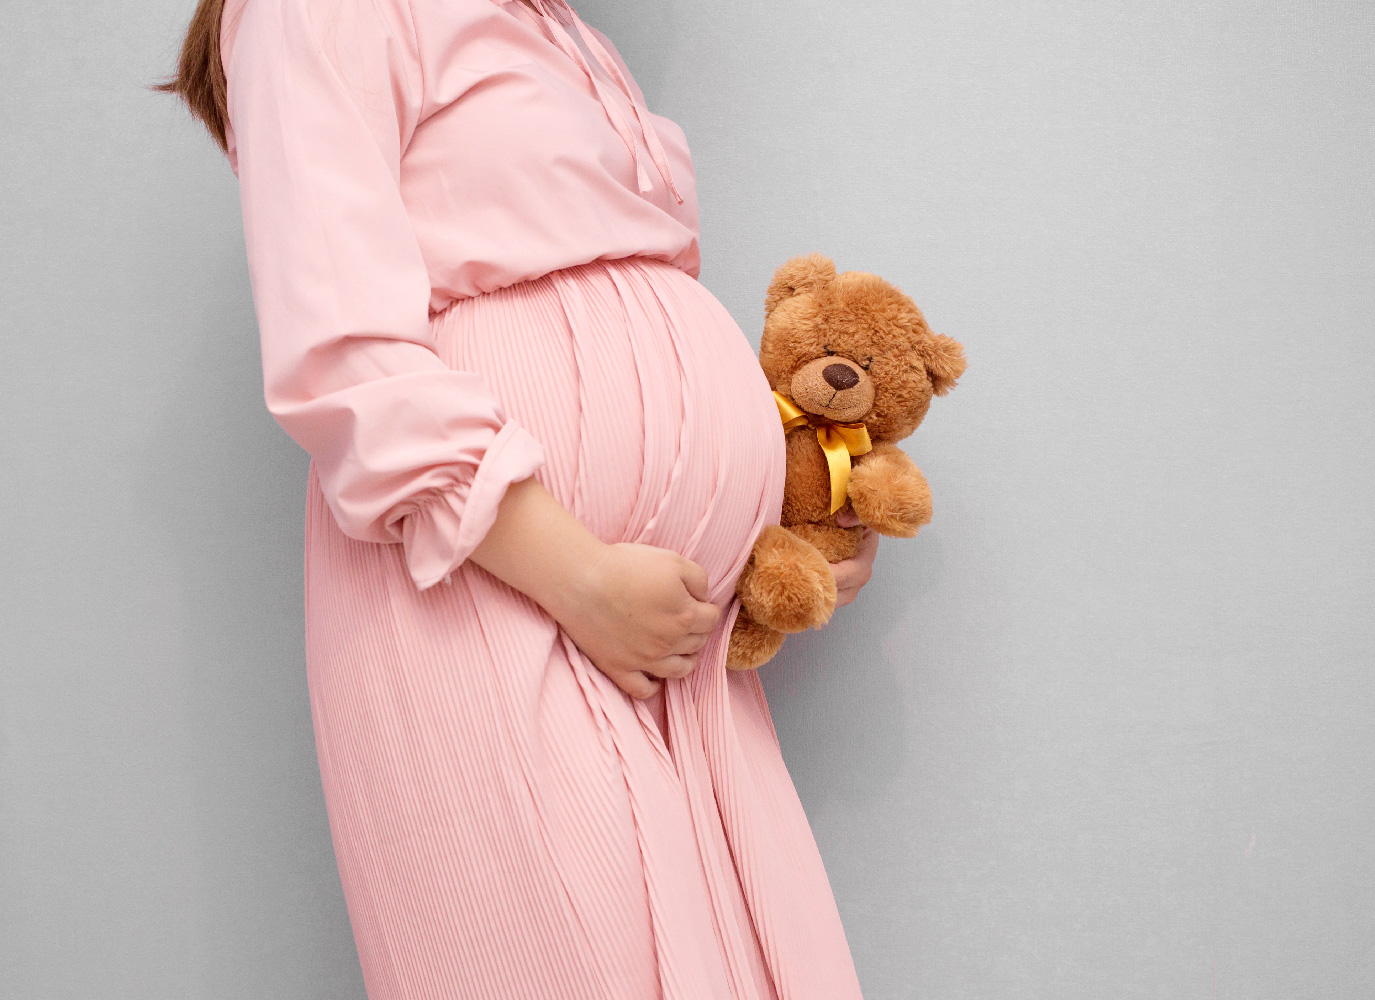 Chuẩn bị cơ thể cho thai kỳ phải làm sao?